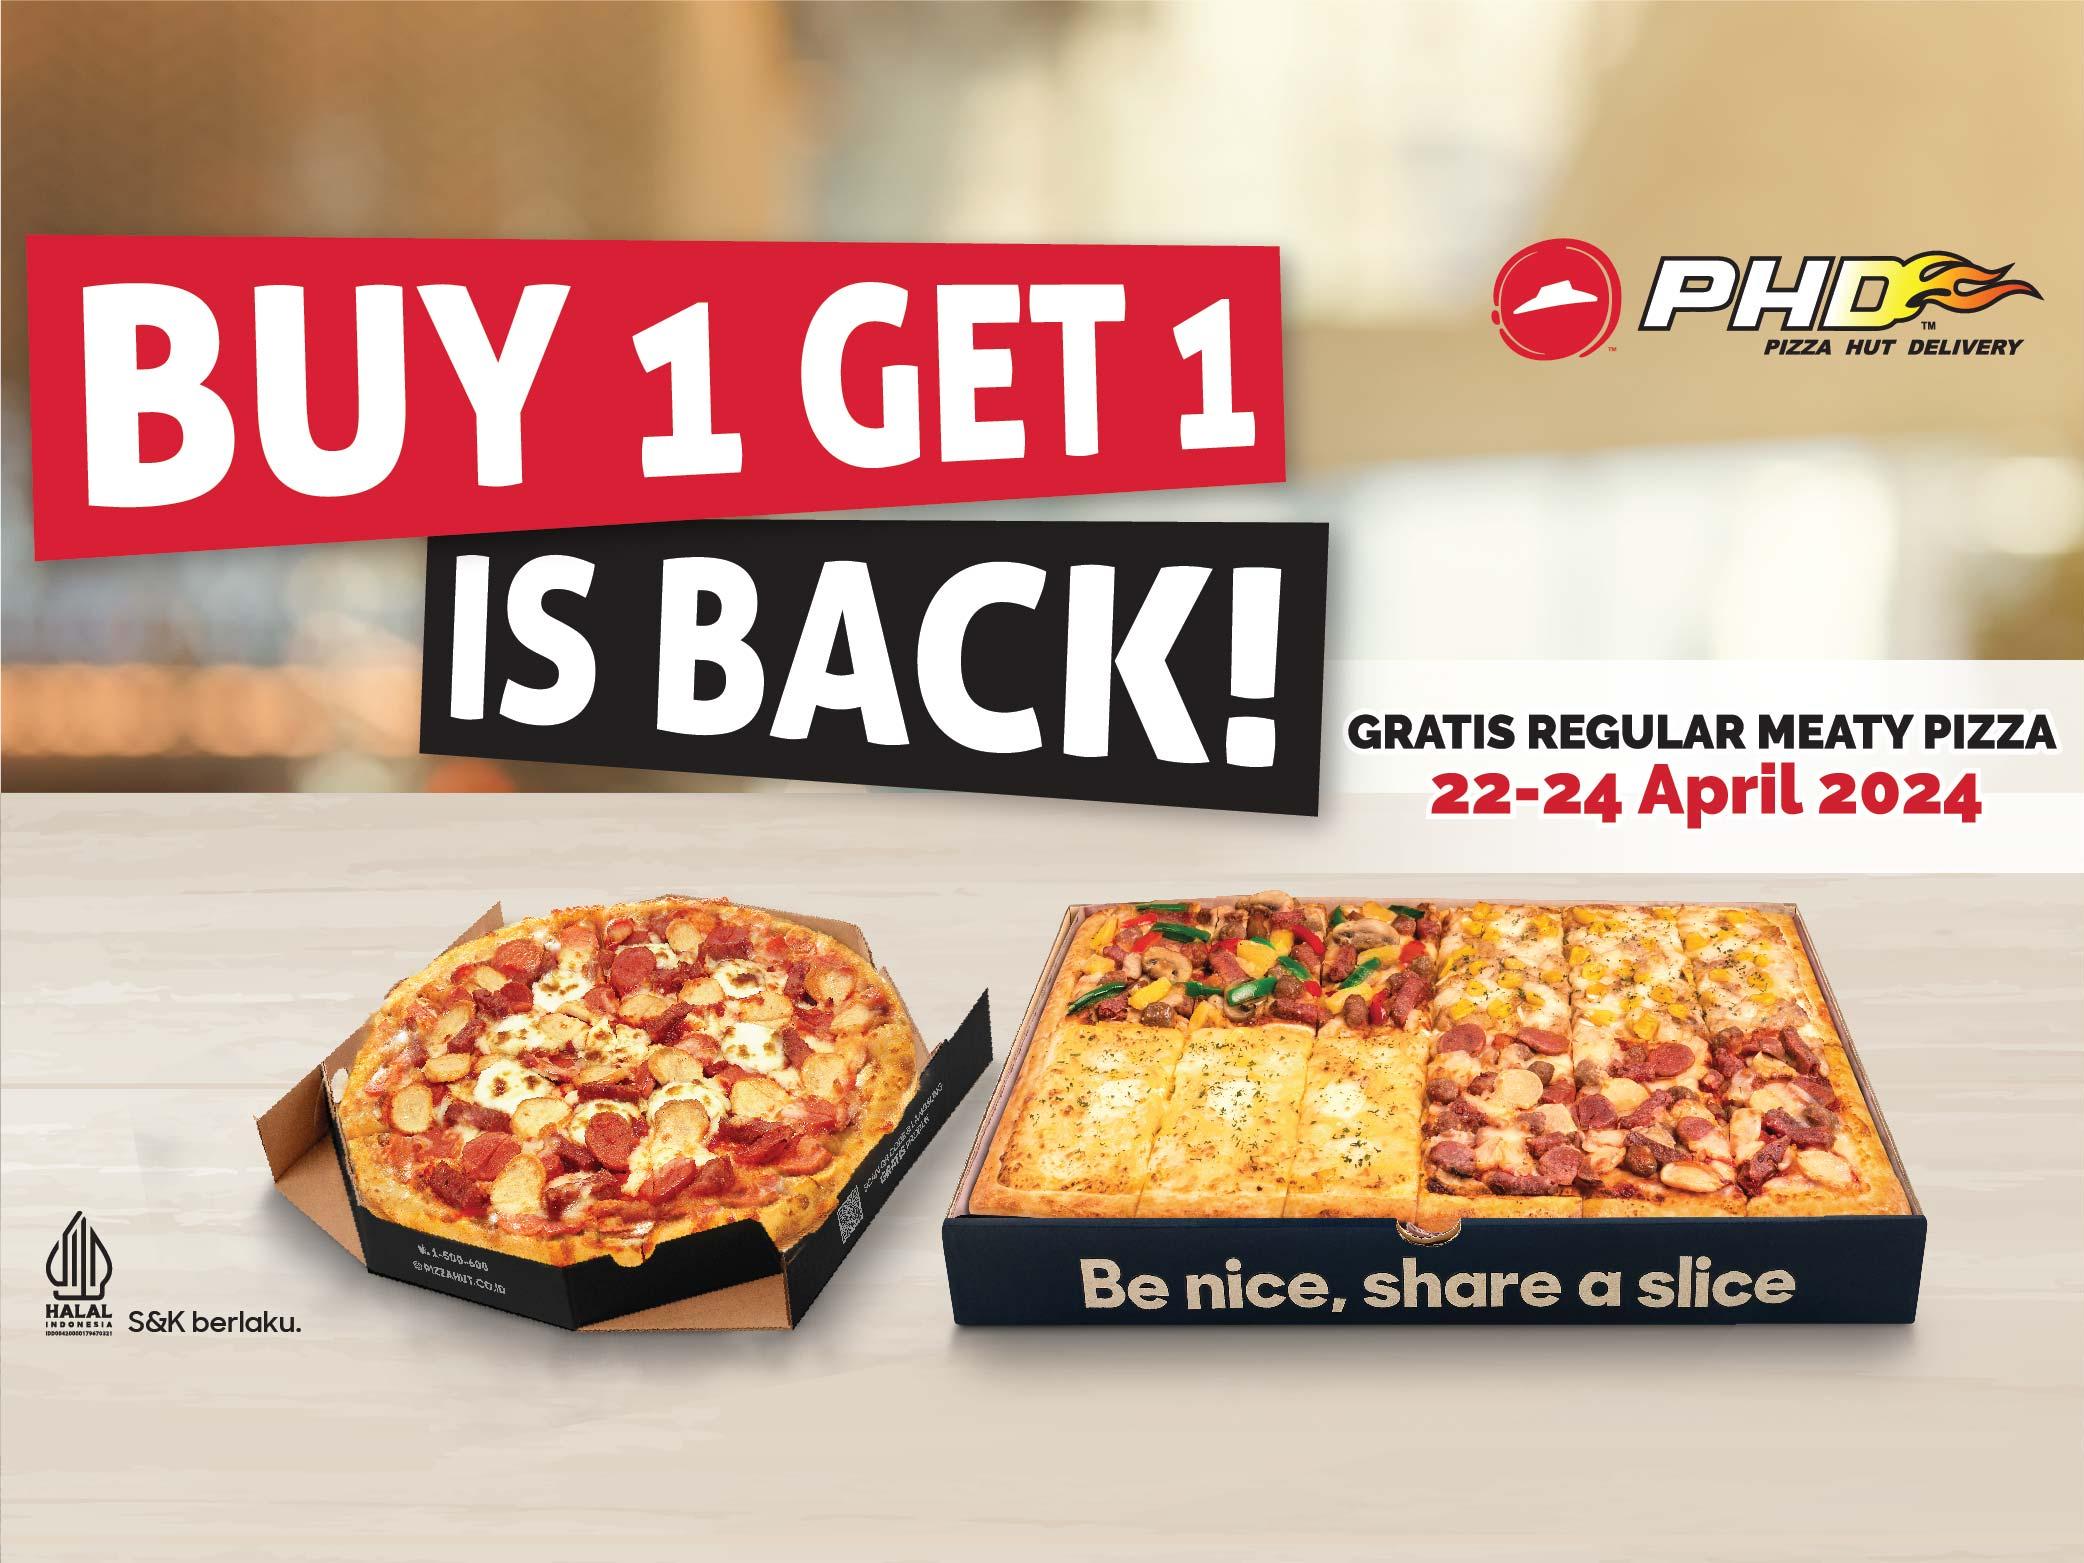 Pizza Hut Delivery - PHD, Otto Iskandardinata Subang